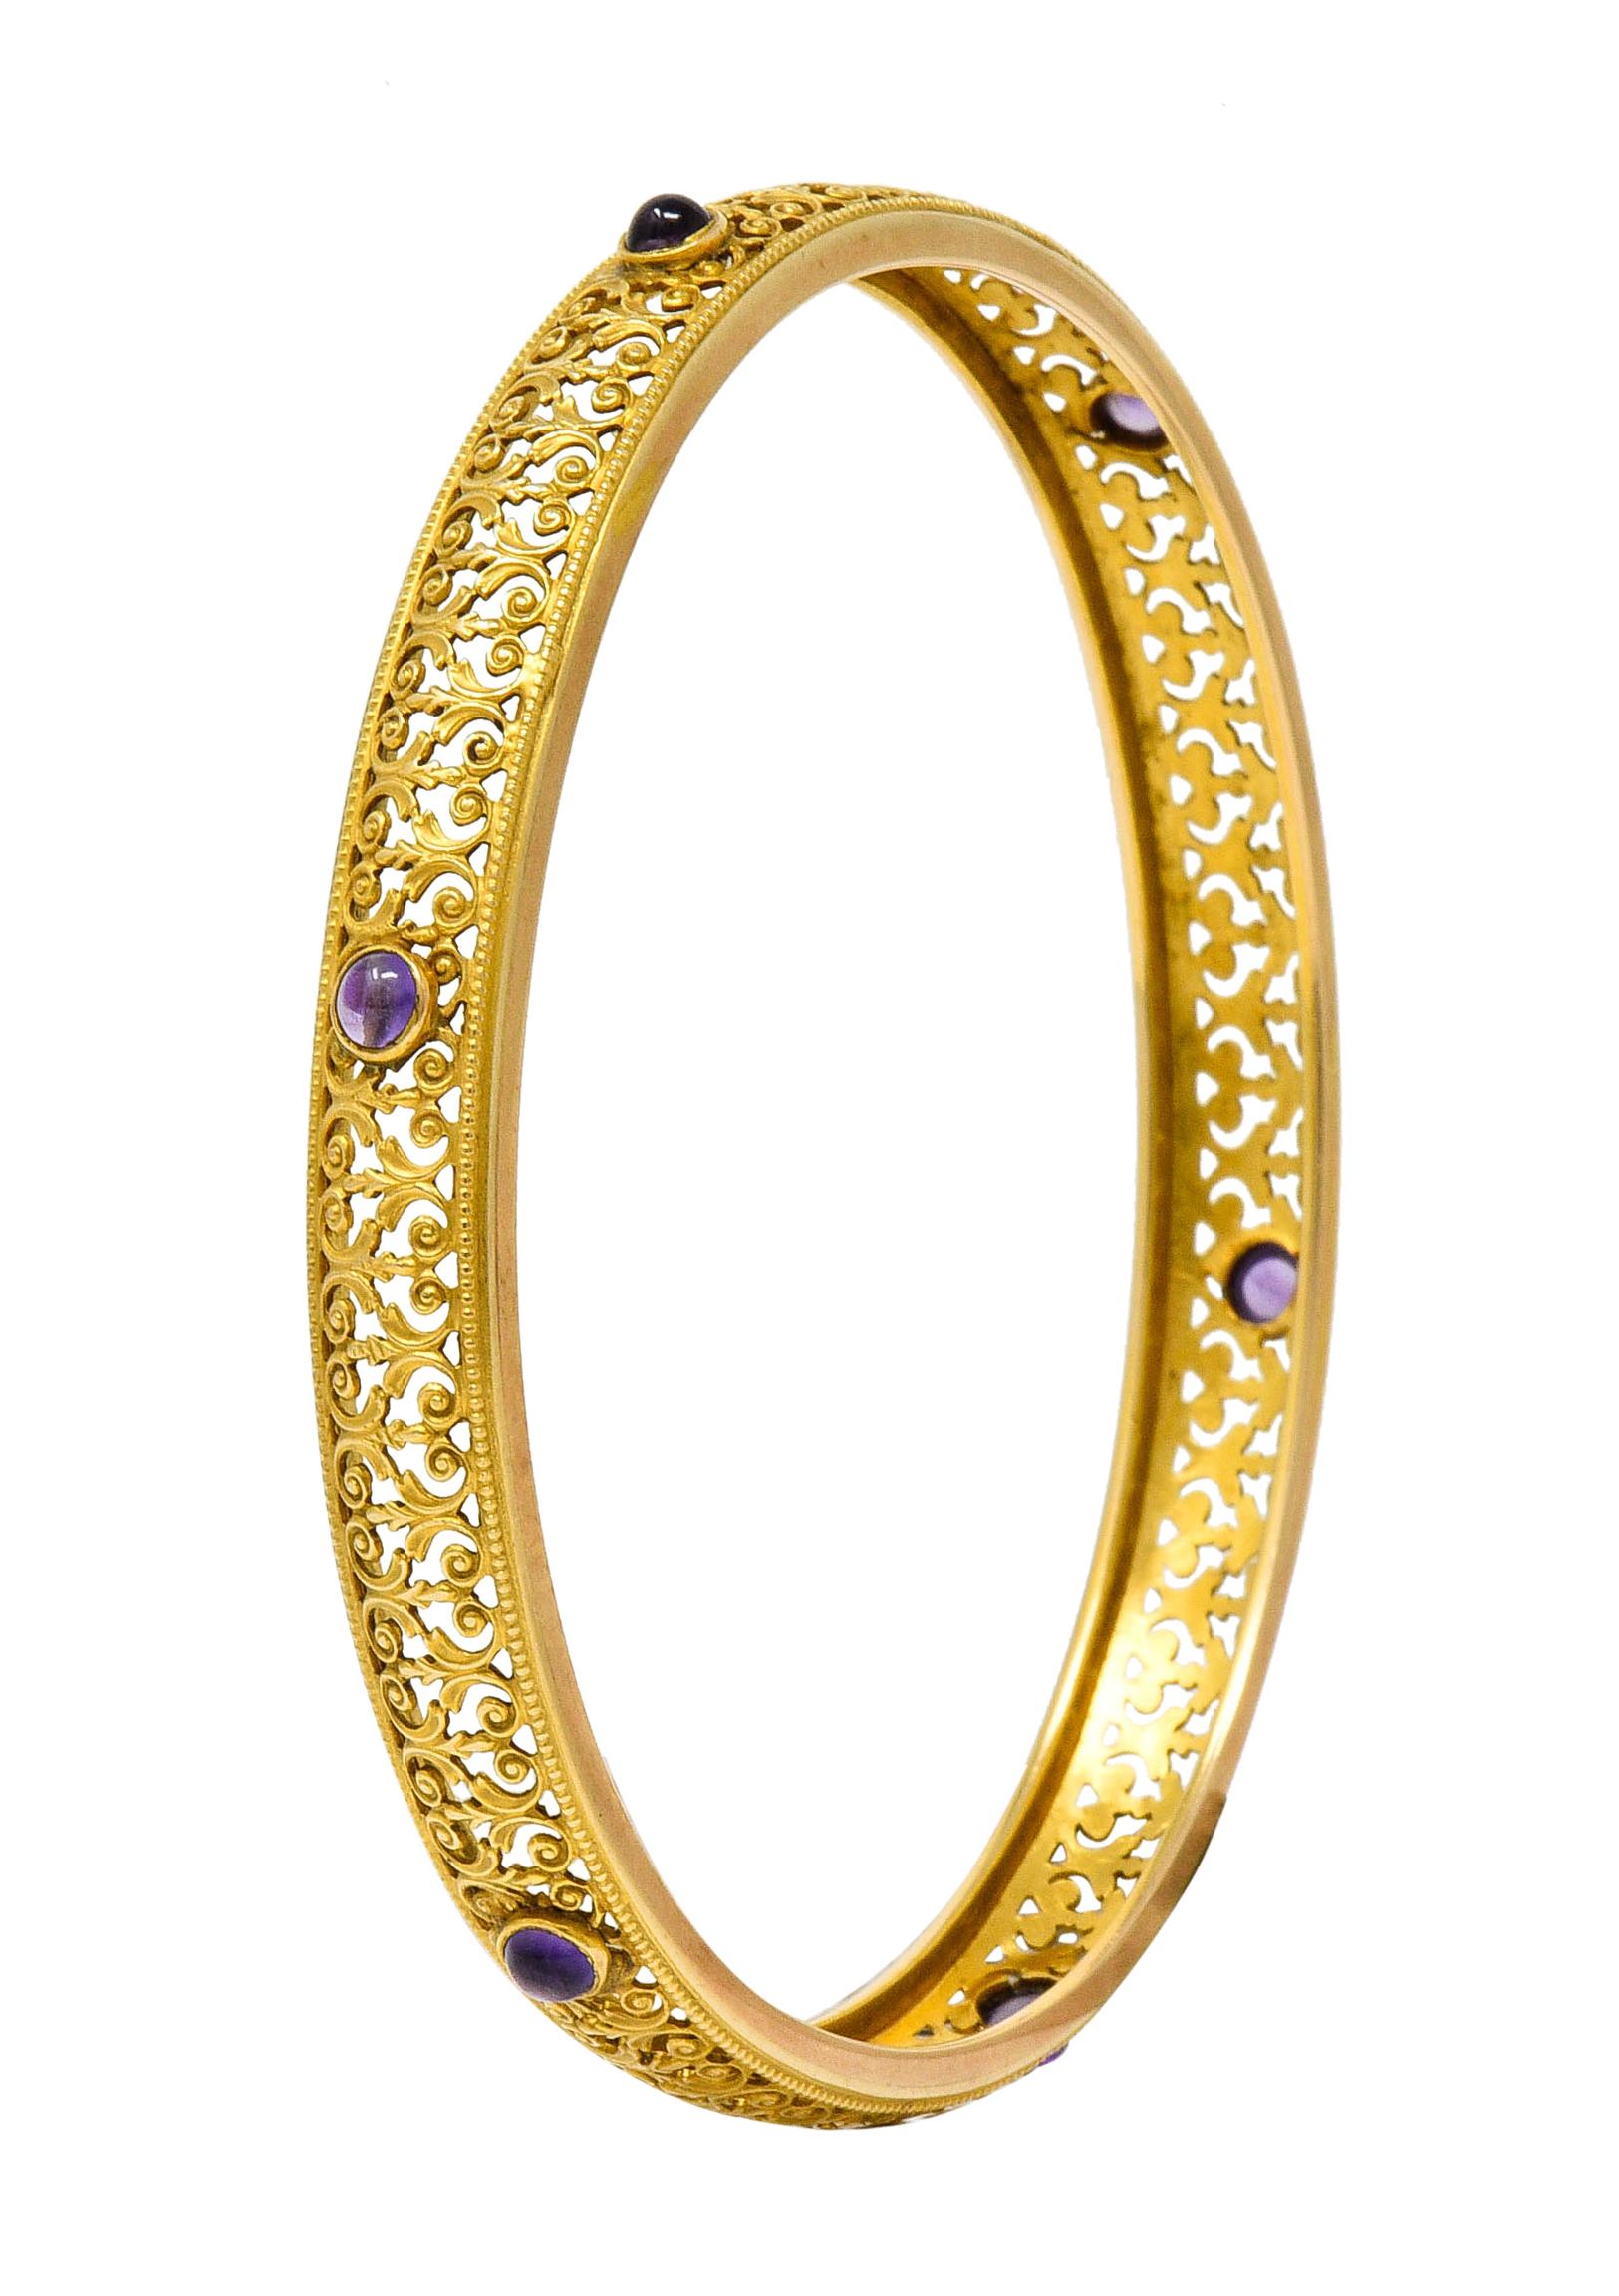 Women's or Men's Art Nouveau Amethyst 14 Karat Gold Scrolled Filigree Bangle Bracelet